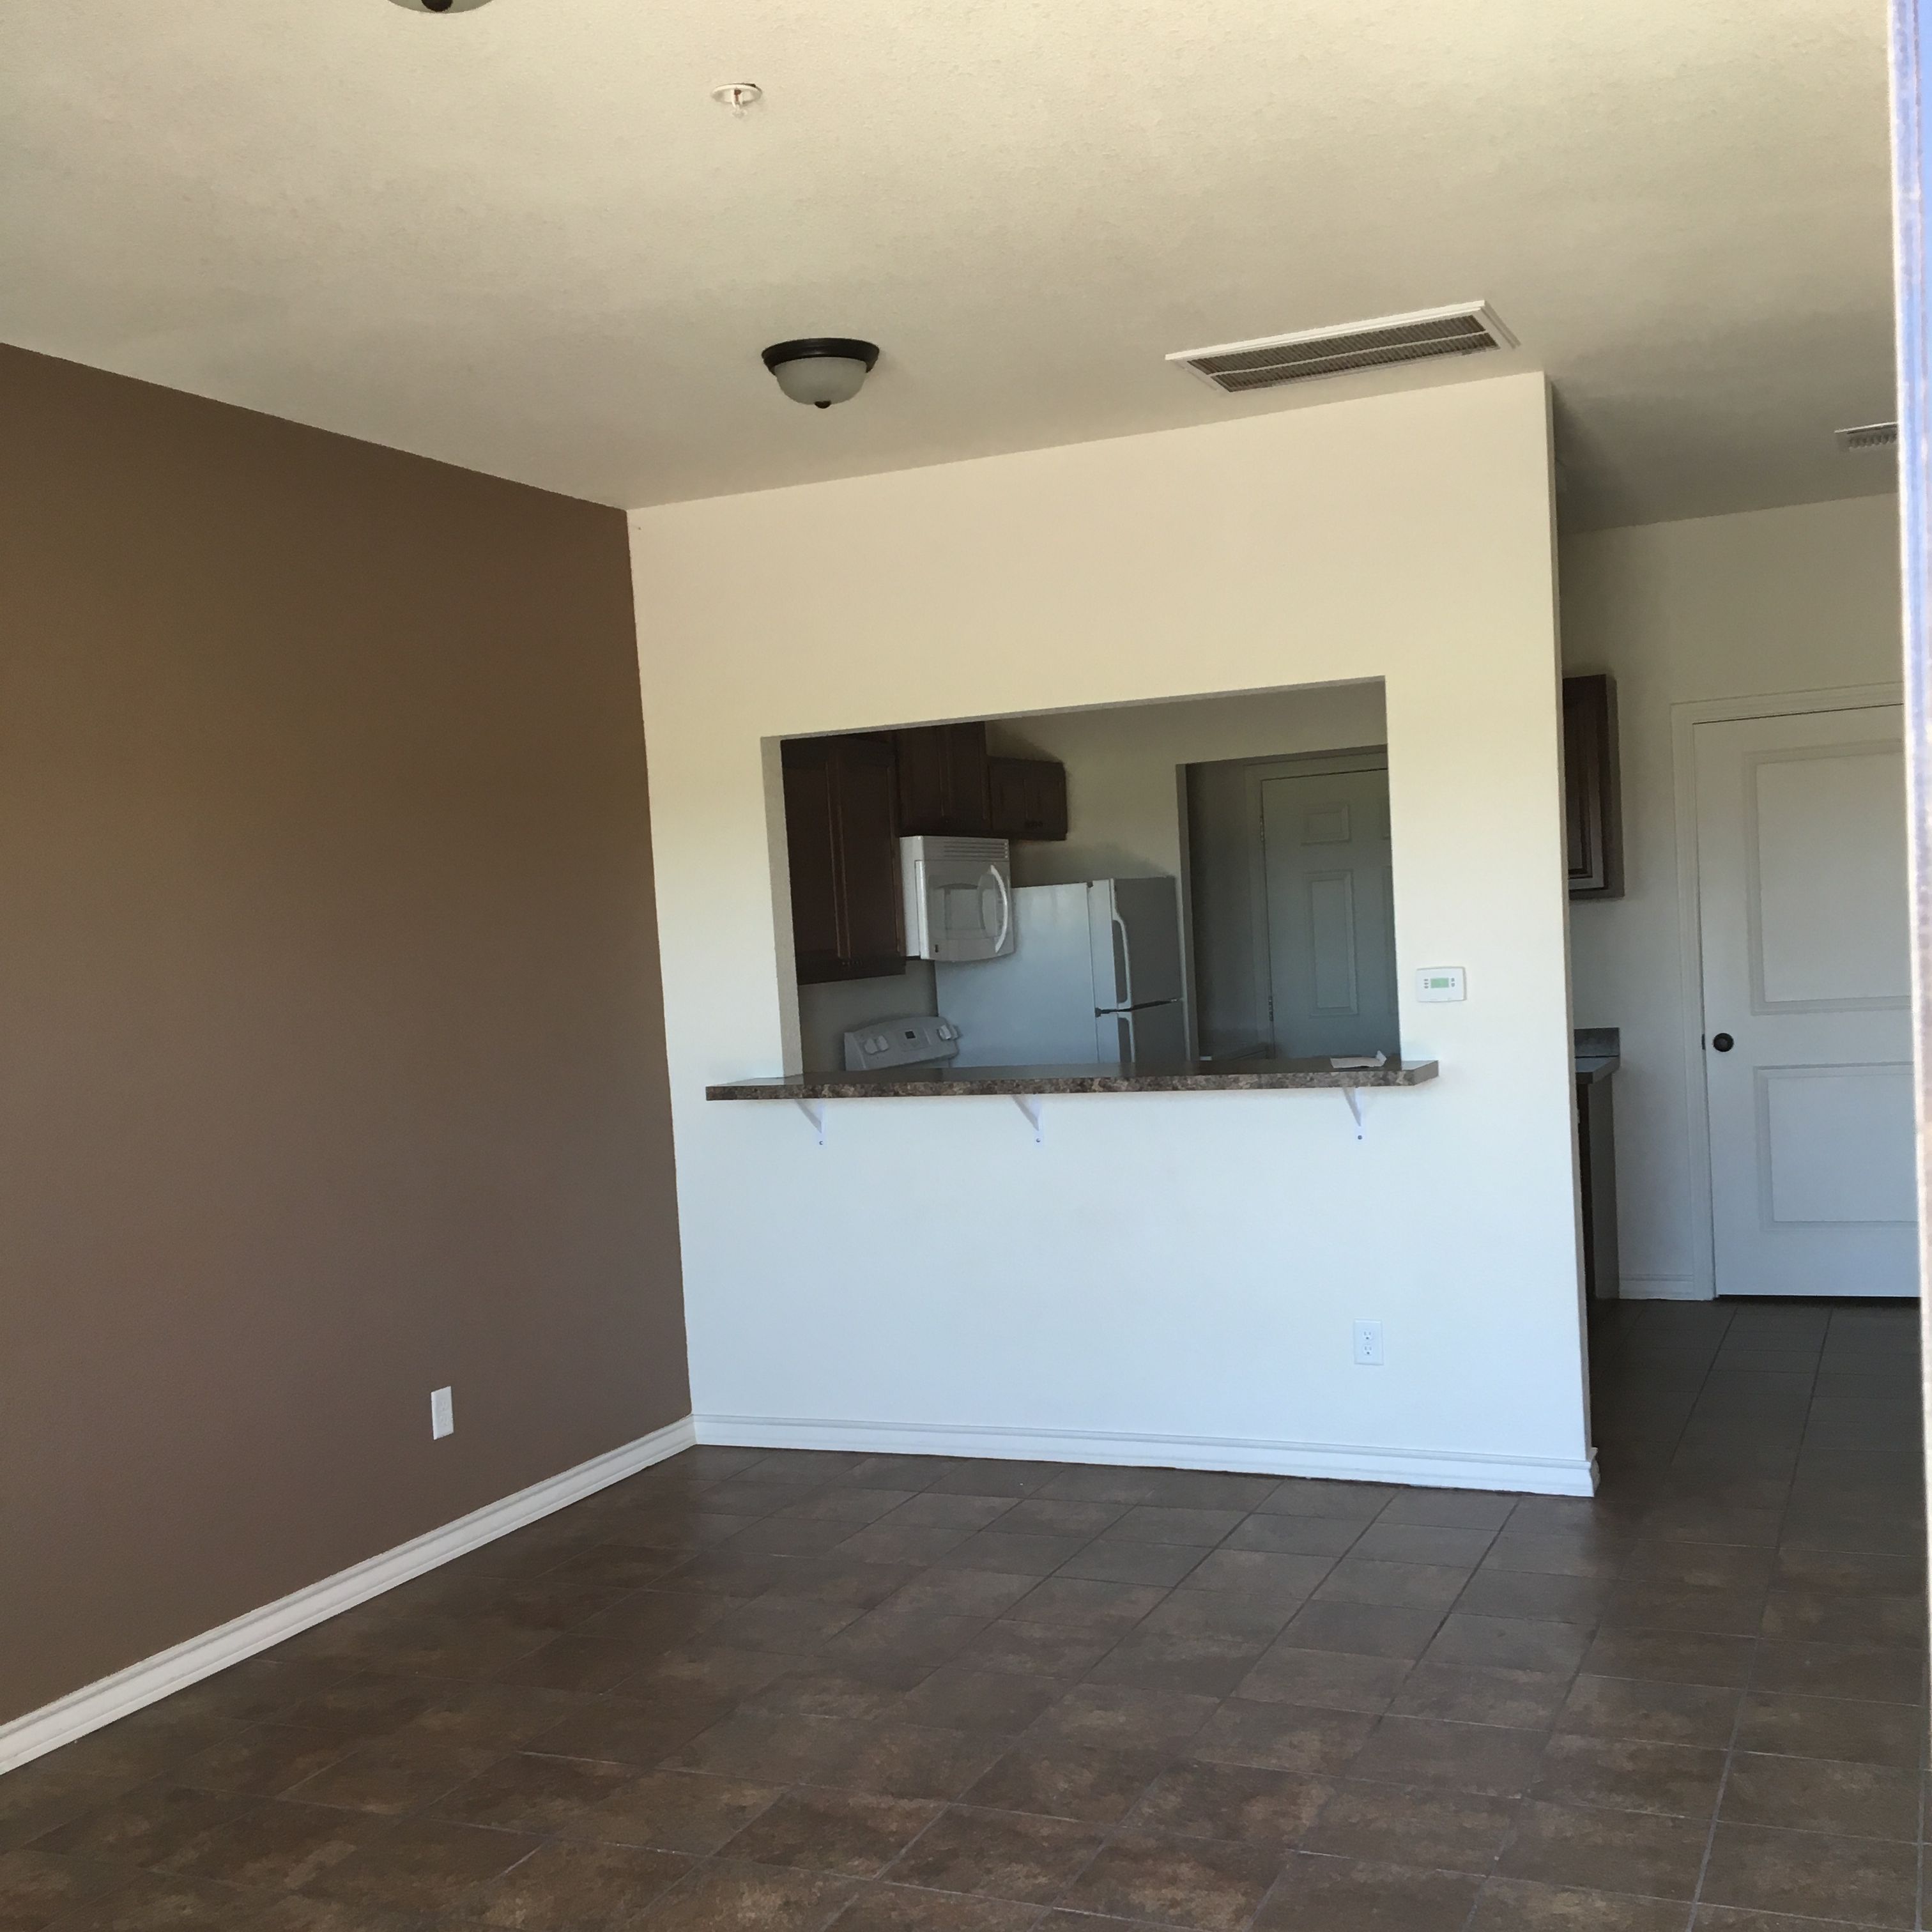 Apartment Units For Rent in Seminole, Texas